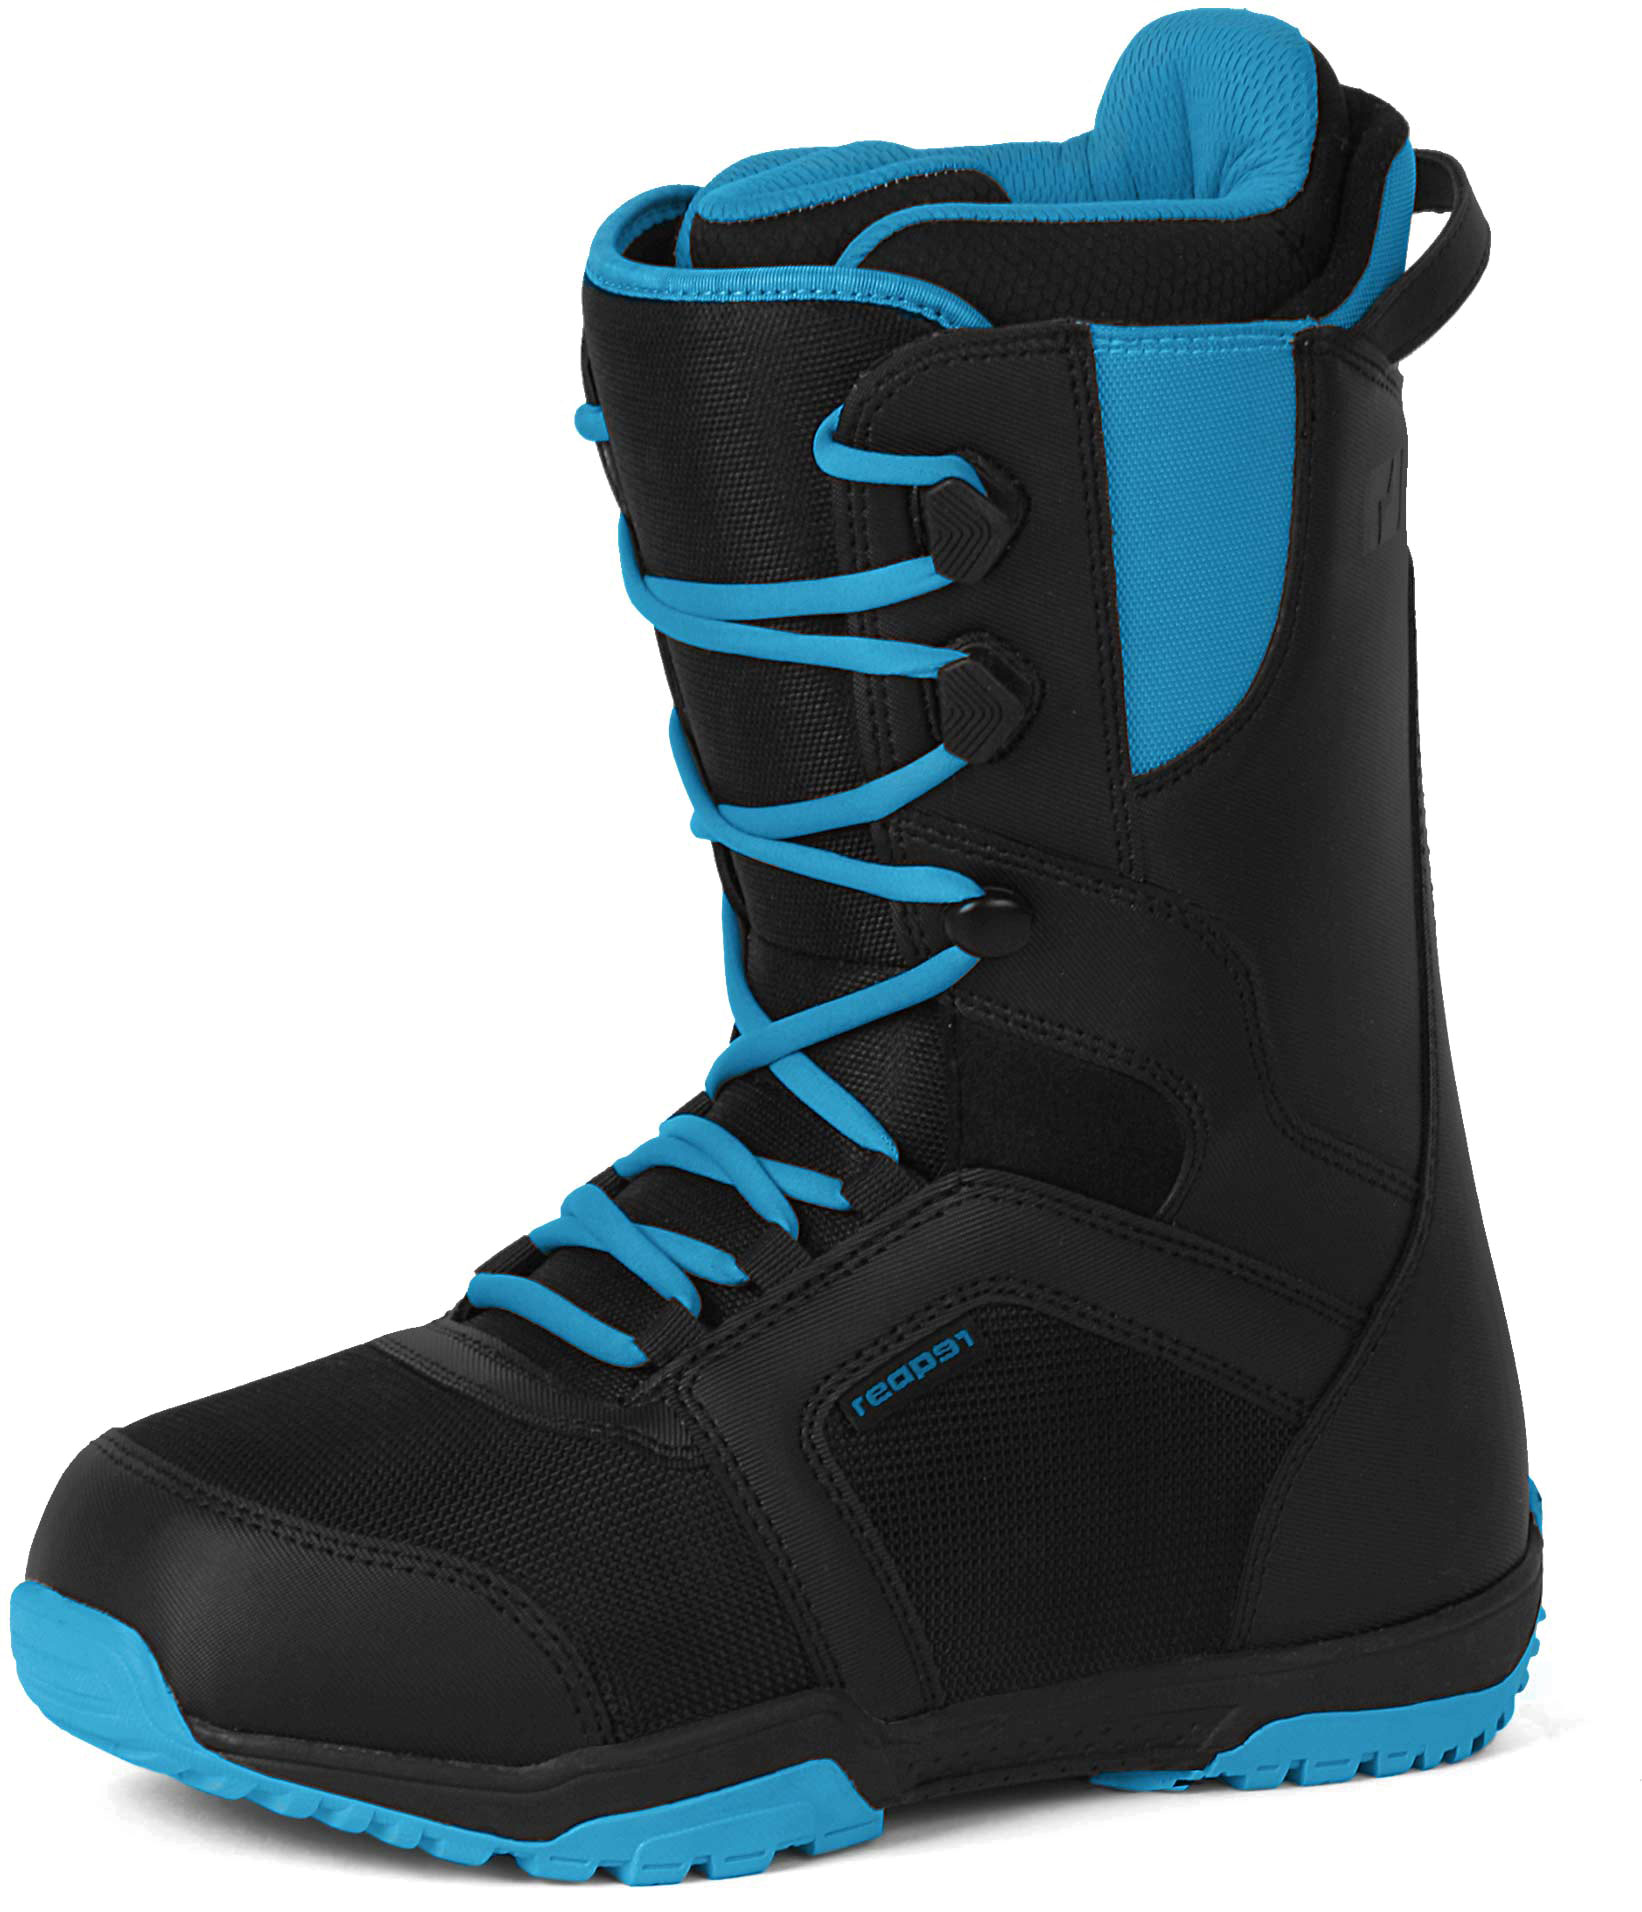 RAZOR - Men's Snowboard Boots